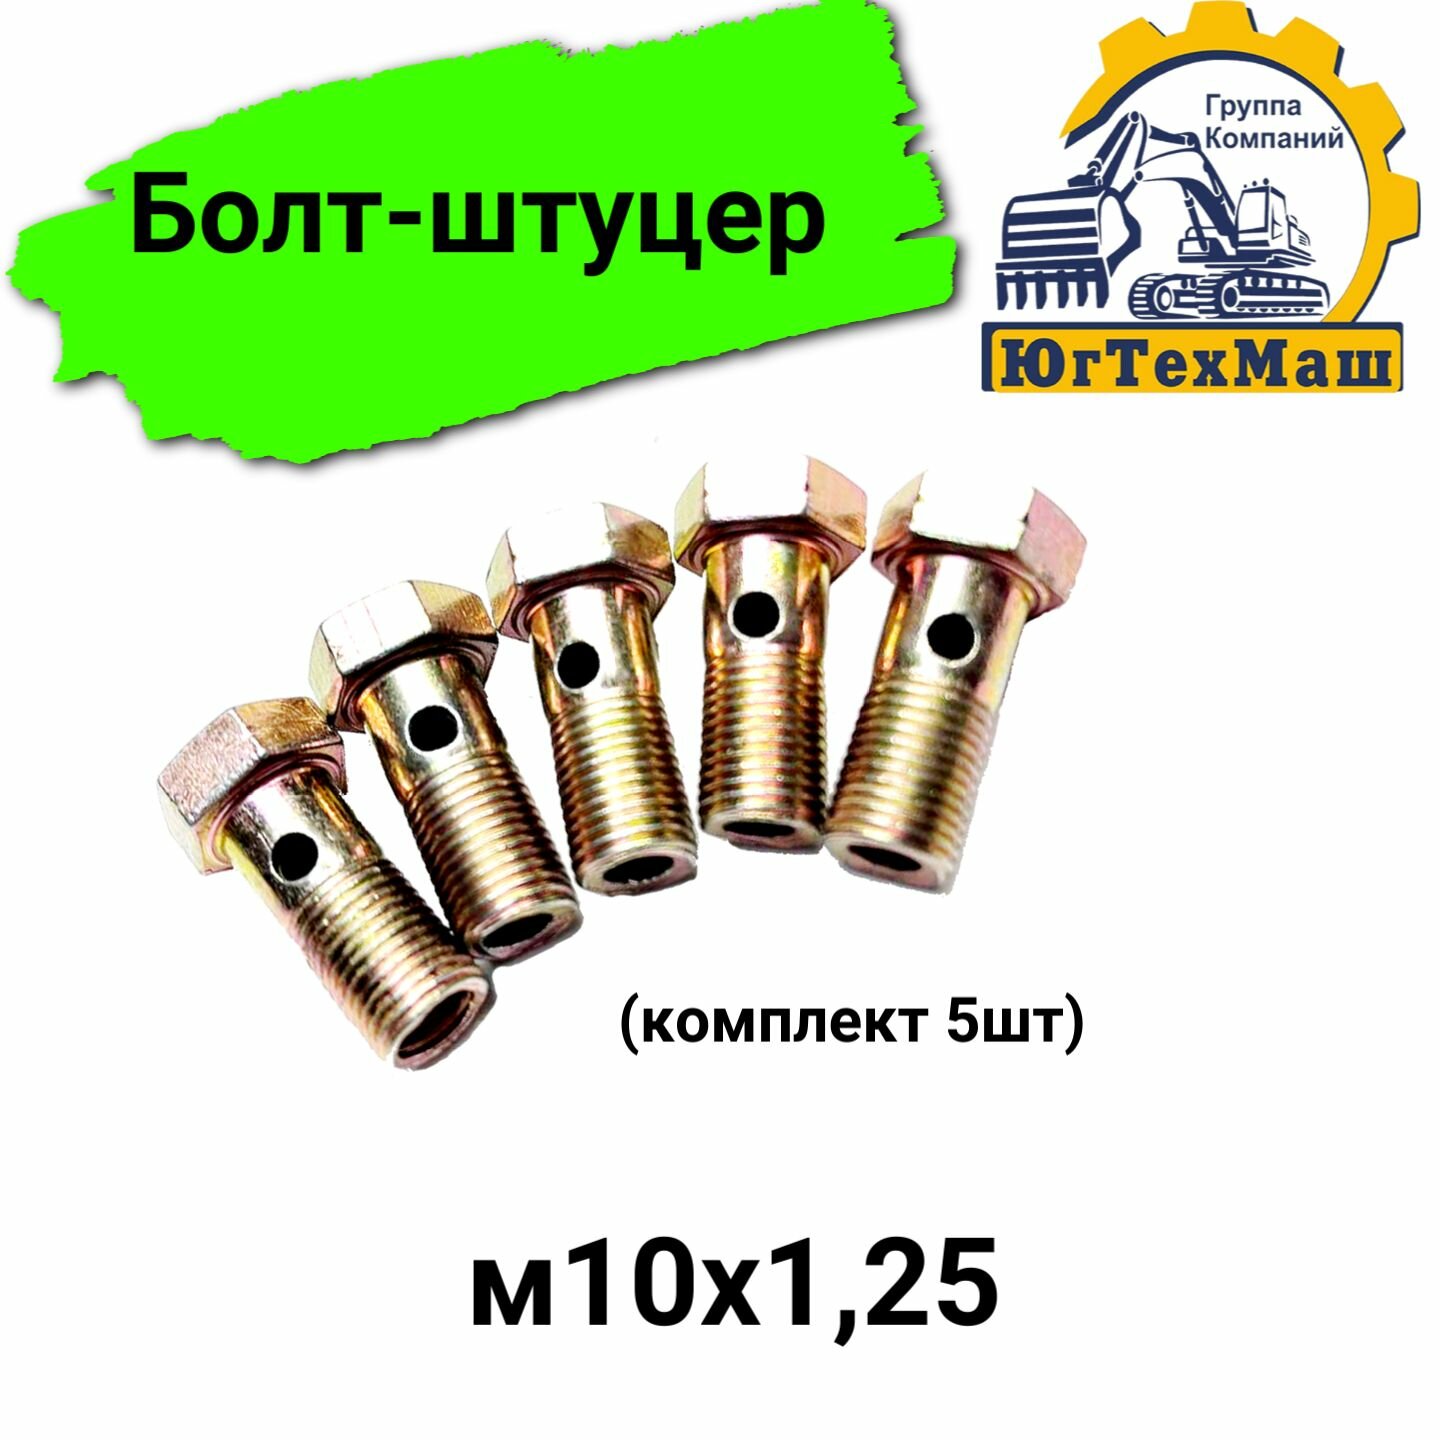 Болт-штуцер м10х1,25 (комплект 5шт)